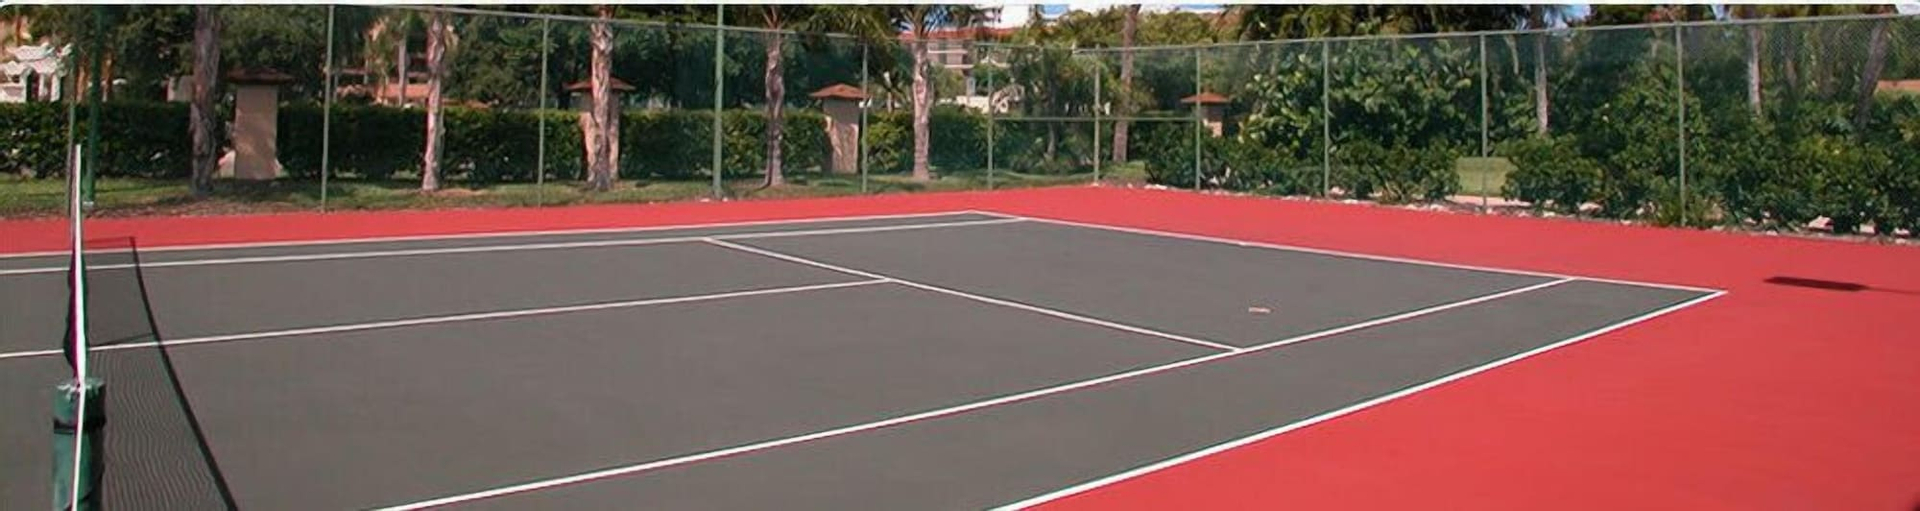 Tennis court, Hotel Termas Balneario Termas Pallares, Zaragoza